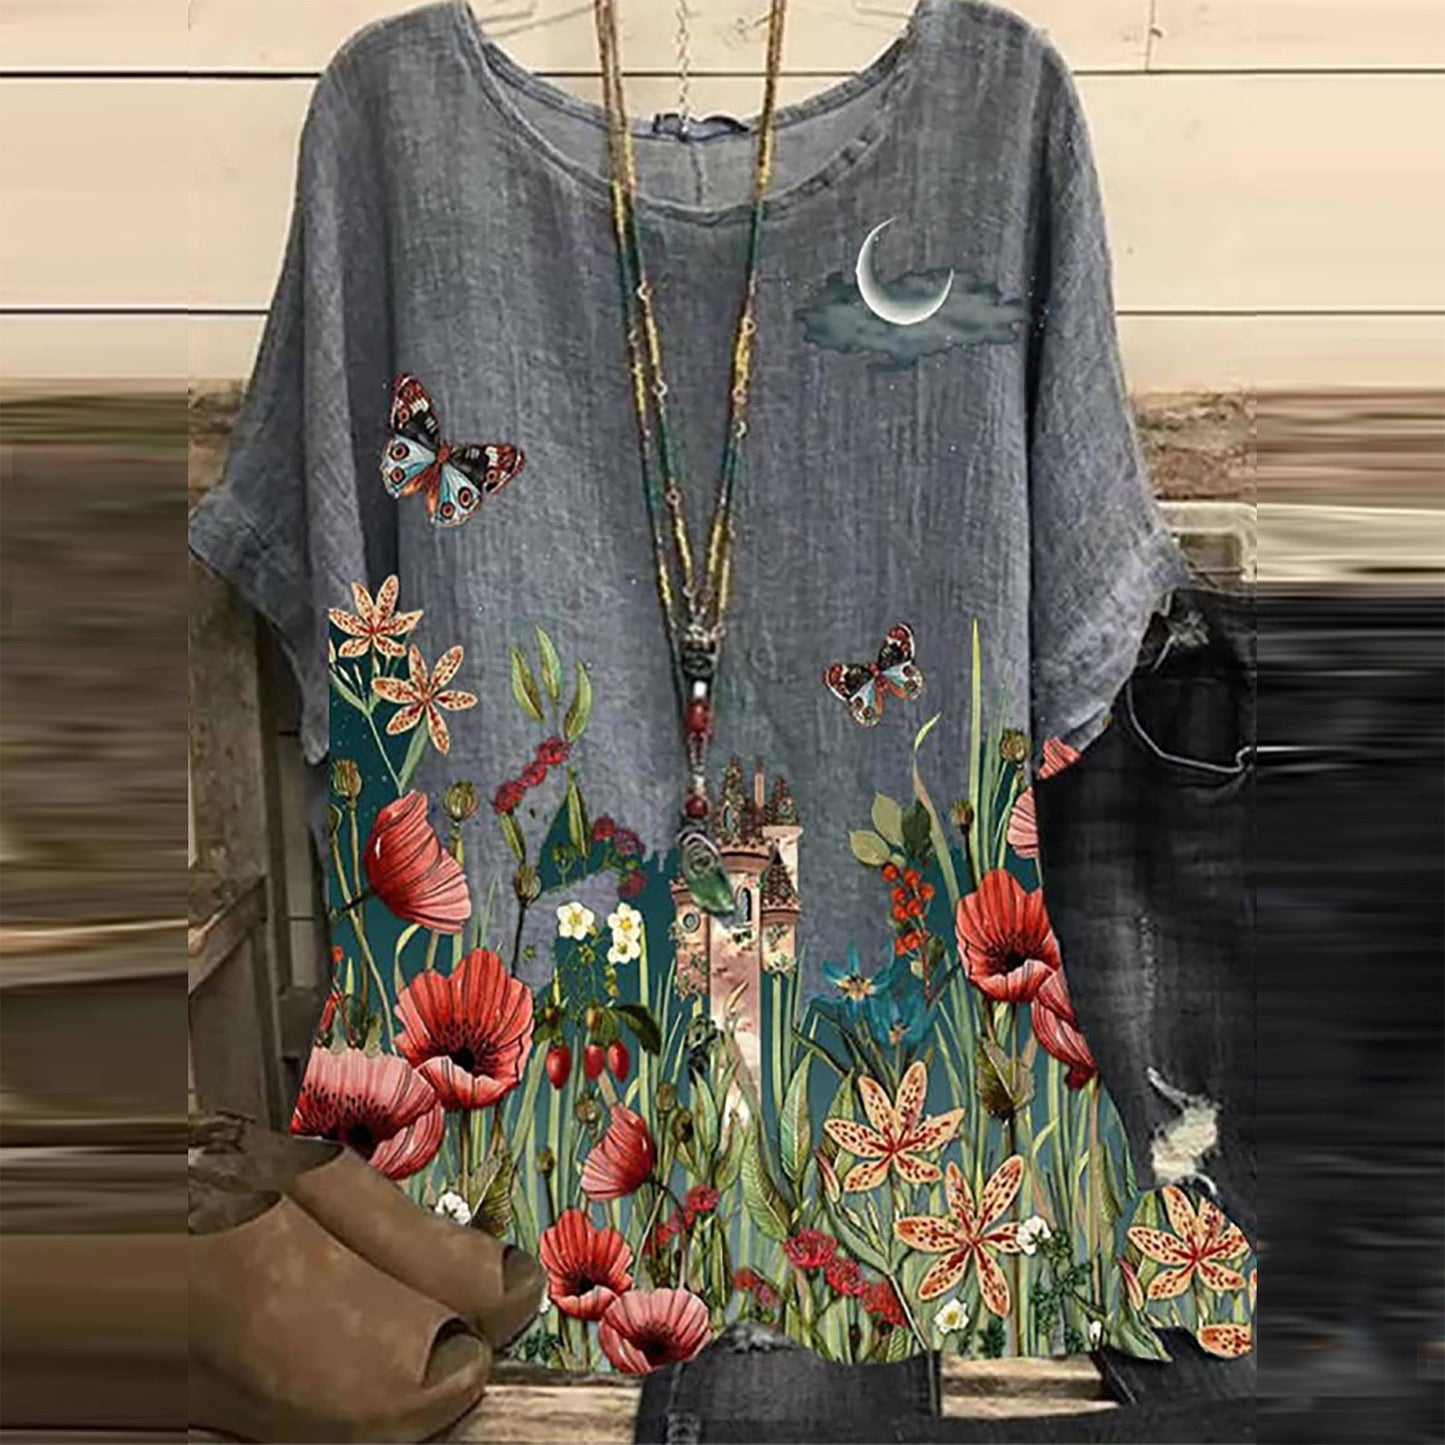 Women's Plus Size Curve Tops Blouse Shirt Floral Butterfly Print Short Sleeve Round Neck Vintage